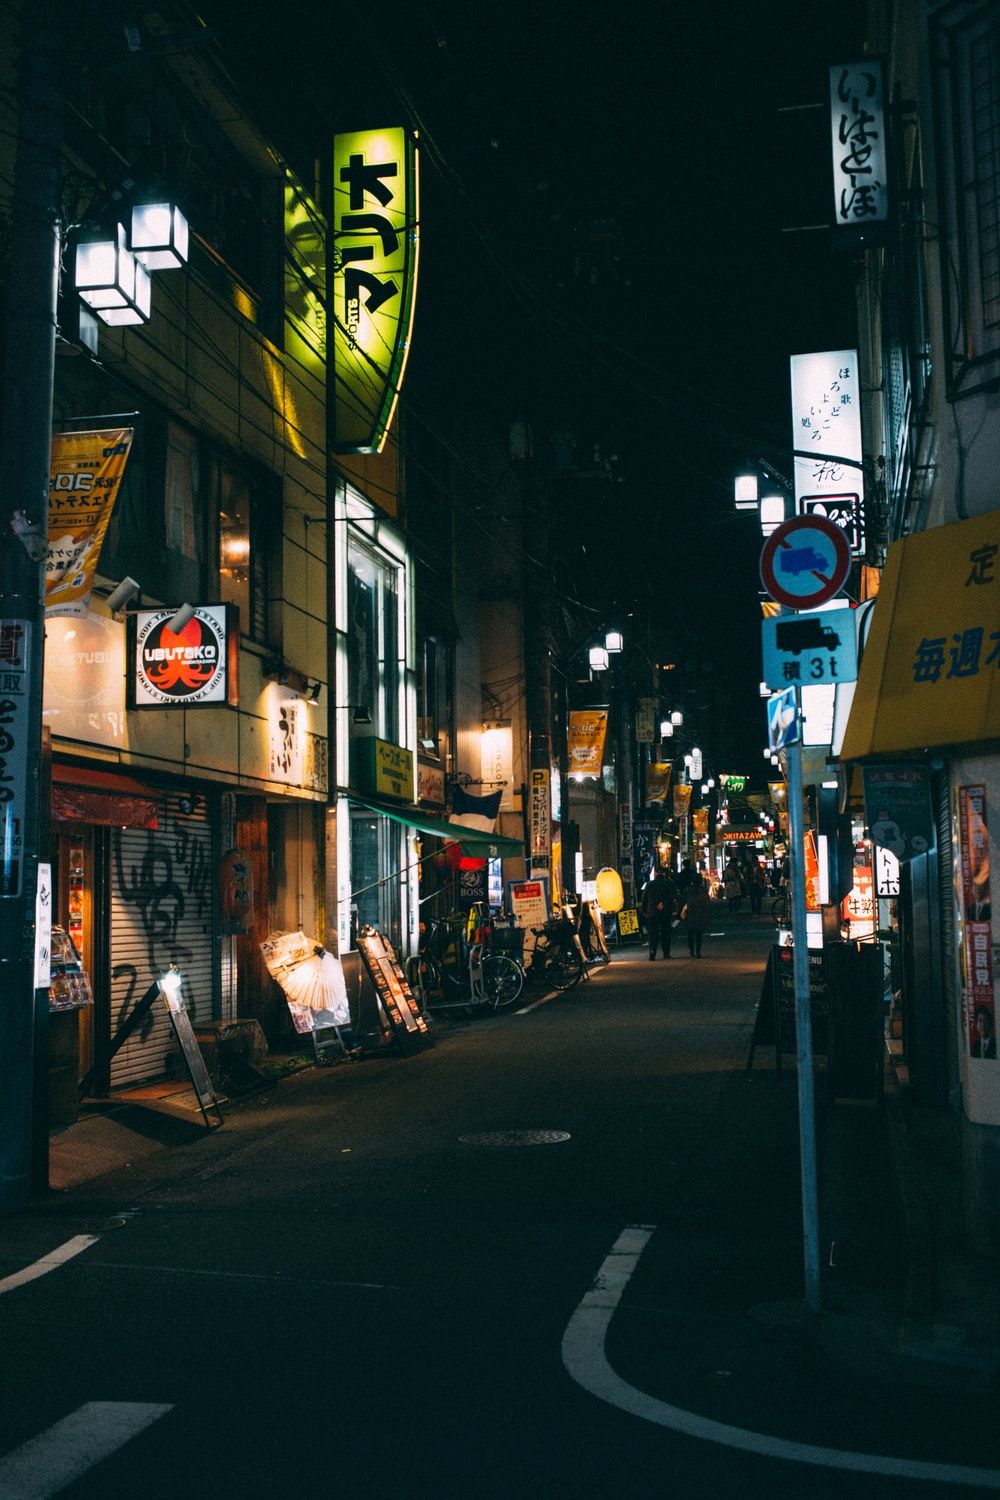 Tokyo Nightlife Picture. Download Free Image